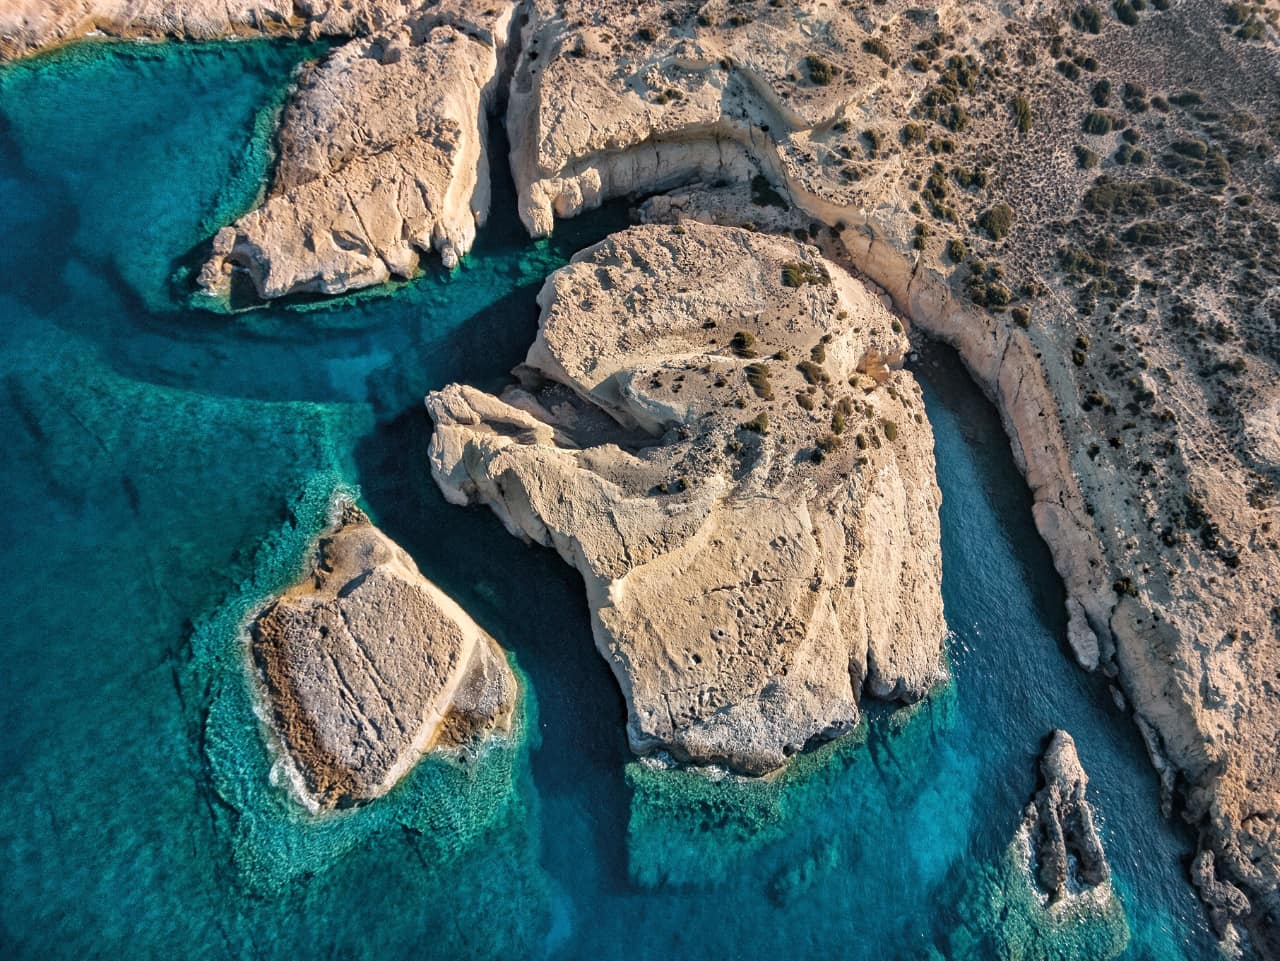 This beautiful hidden gem is near Matala in Crete.